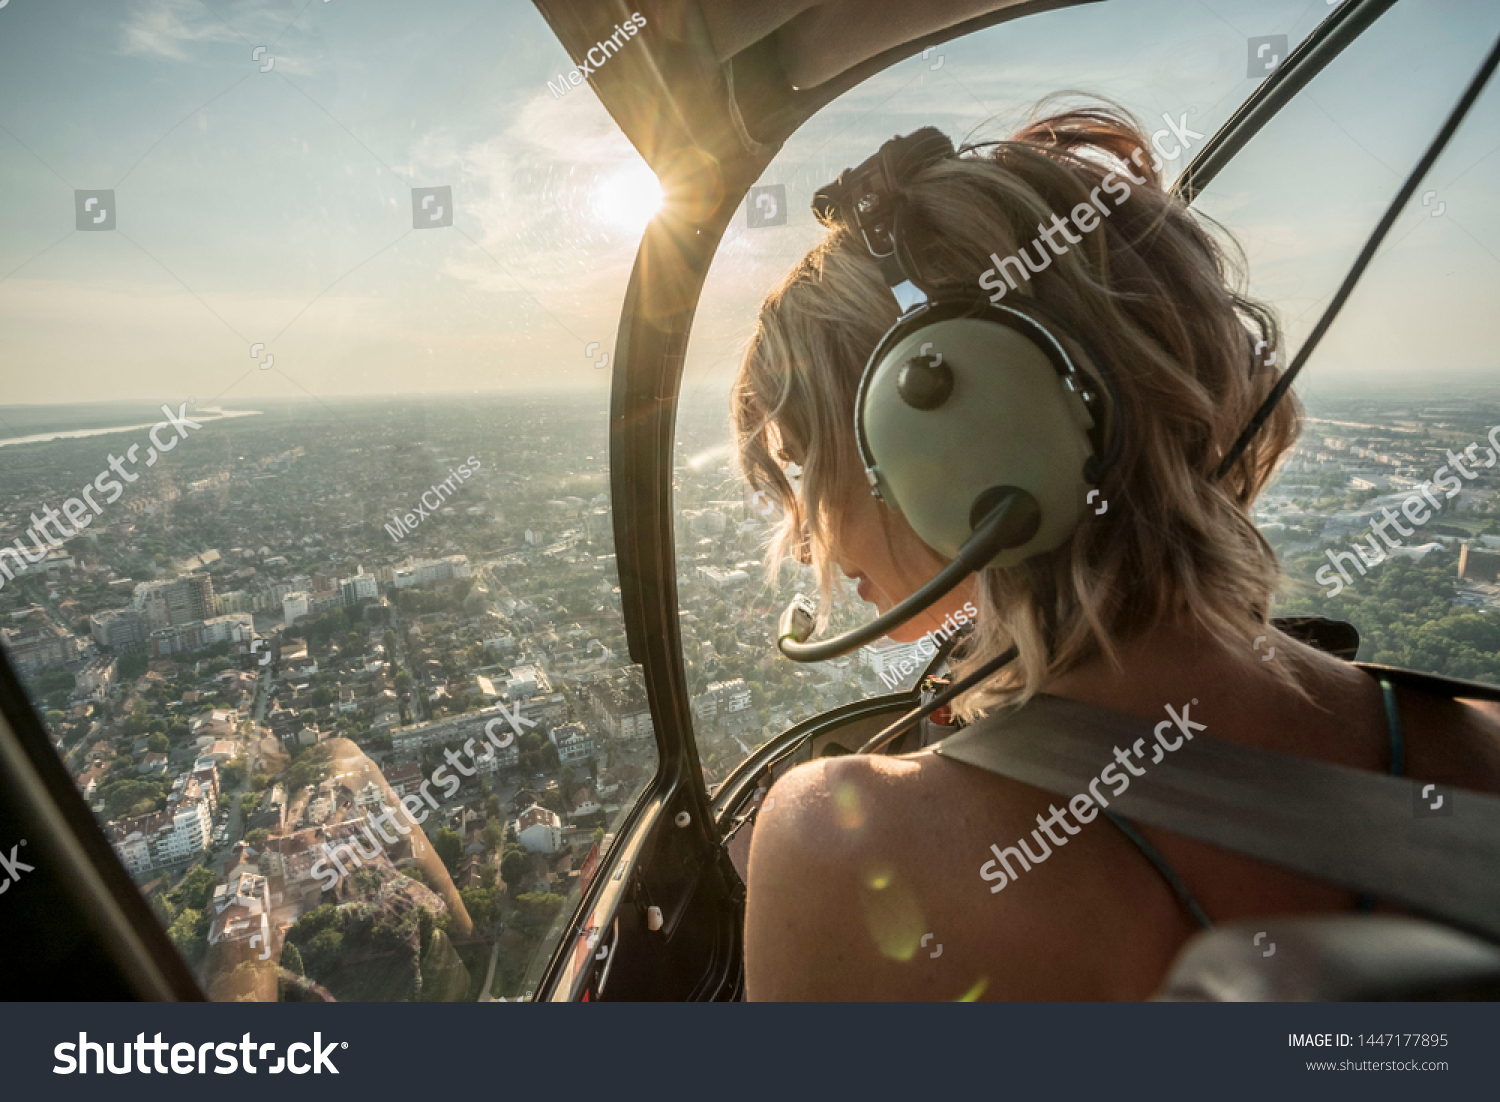 Portrait of beautiful blonde women enjoying helicopter flight. She is amazed by cityscape and wearing pilot headphones.
 #1447177895